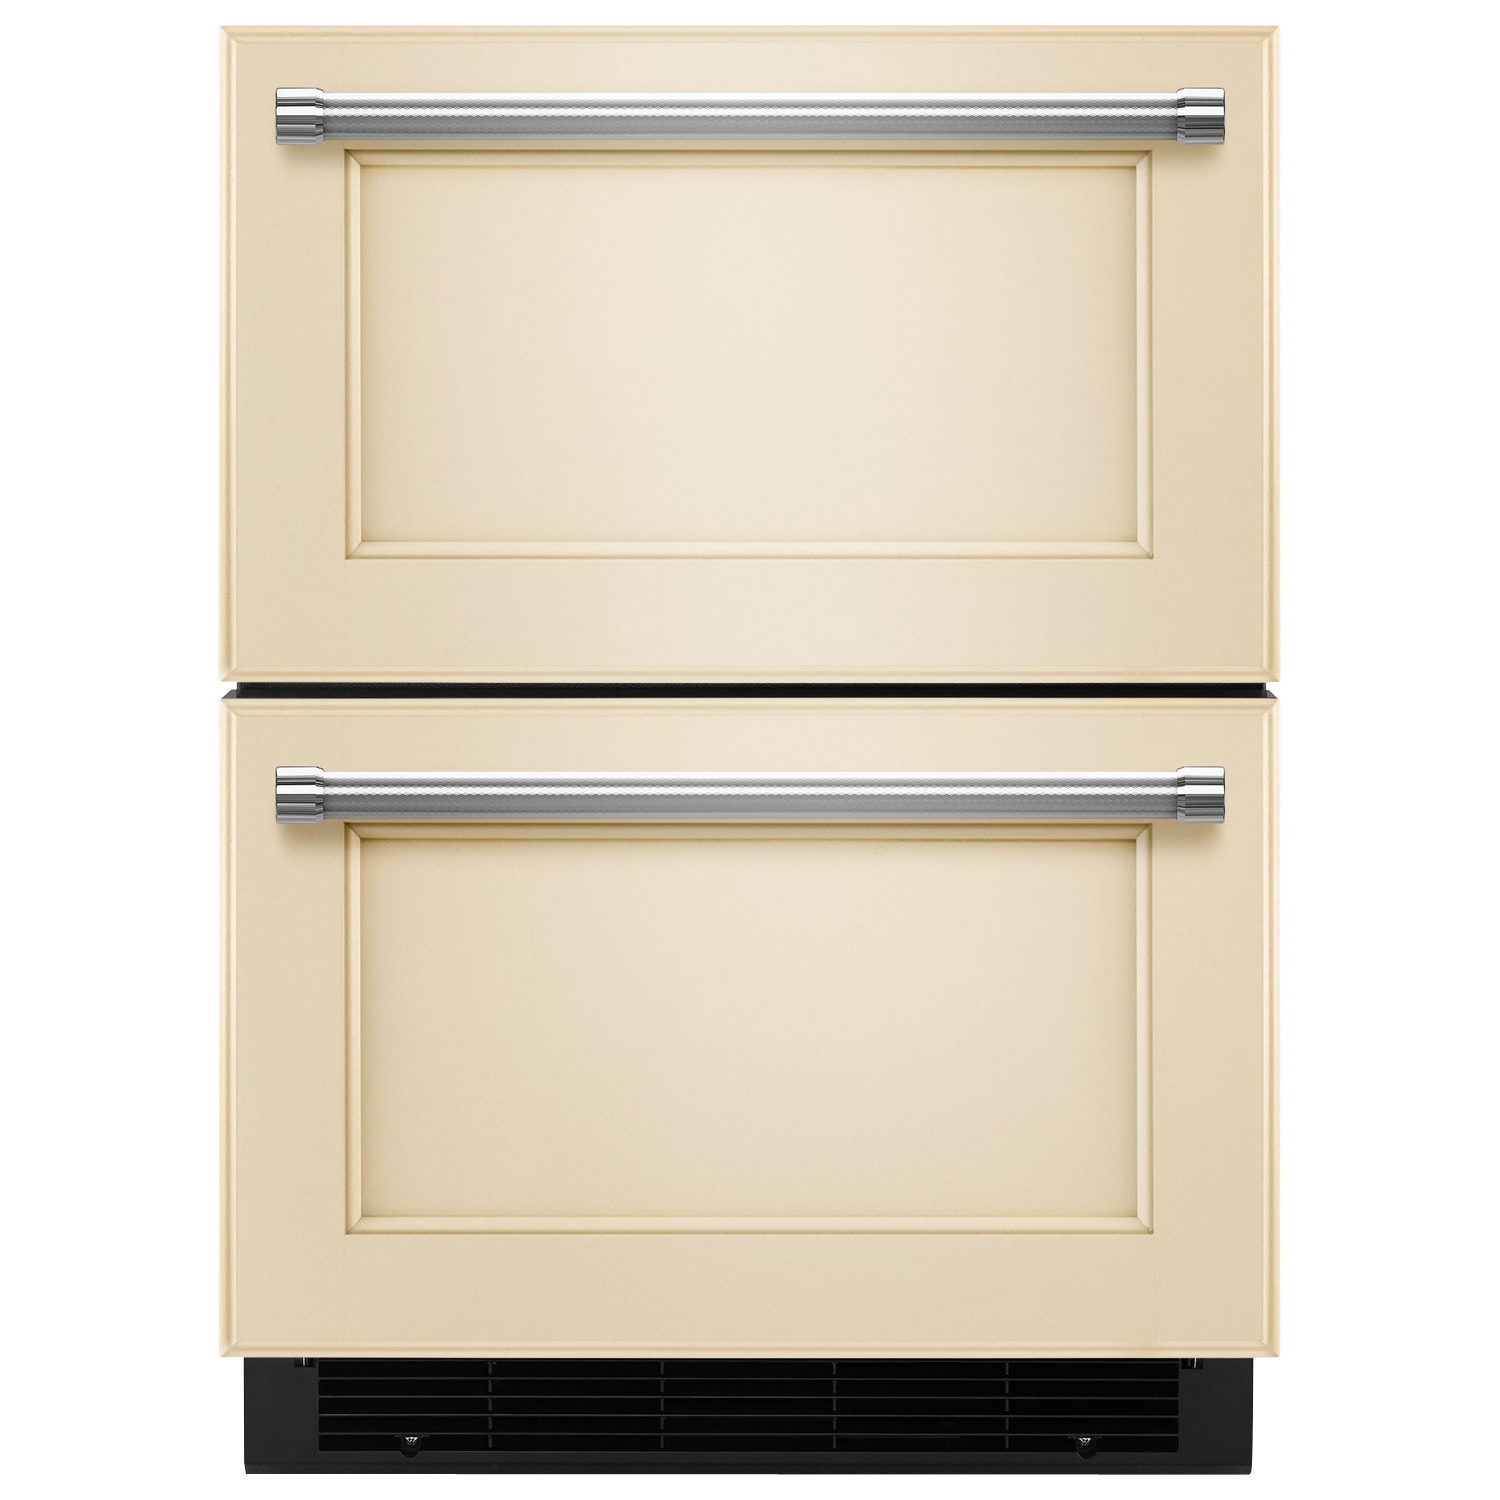 KitchenAid Refrigerador Modelo KUDF204EPA